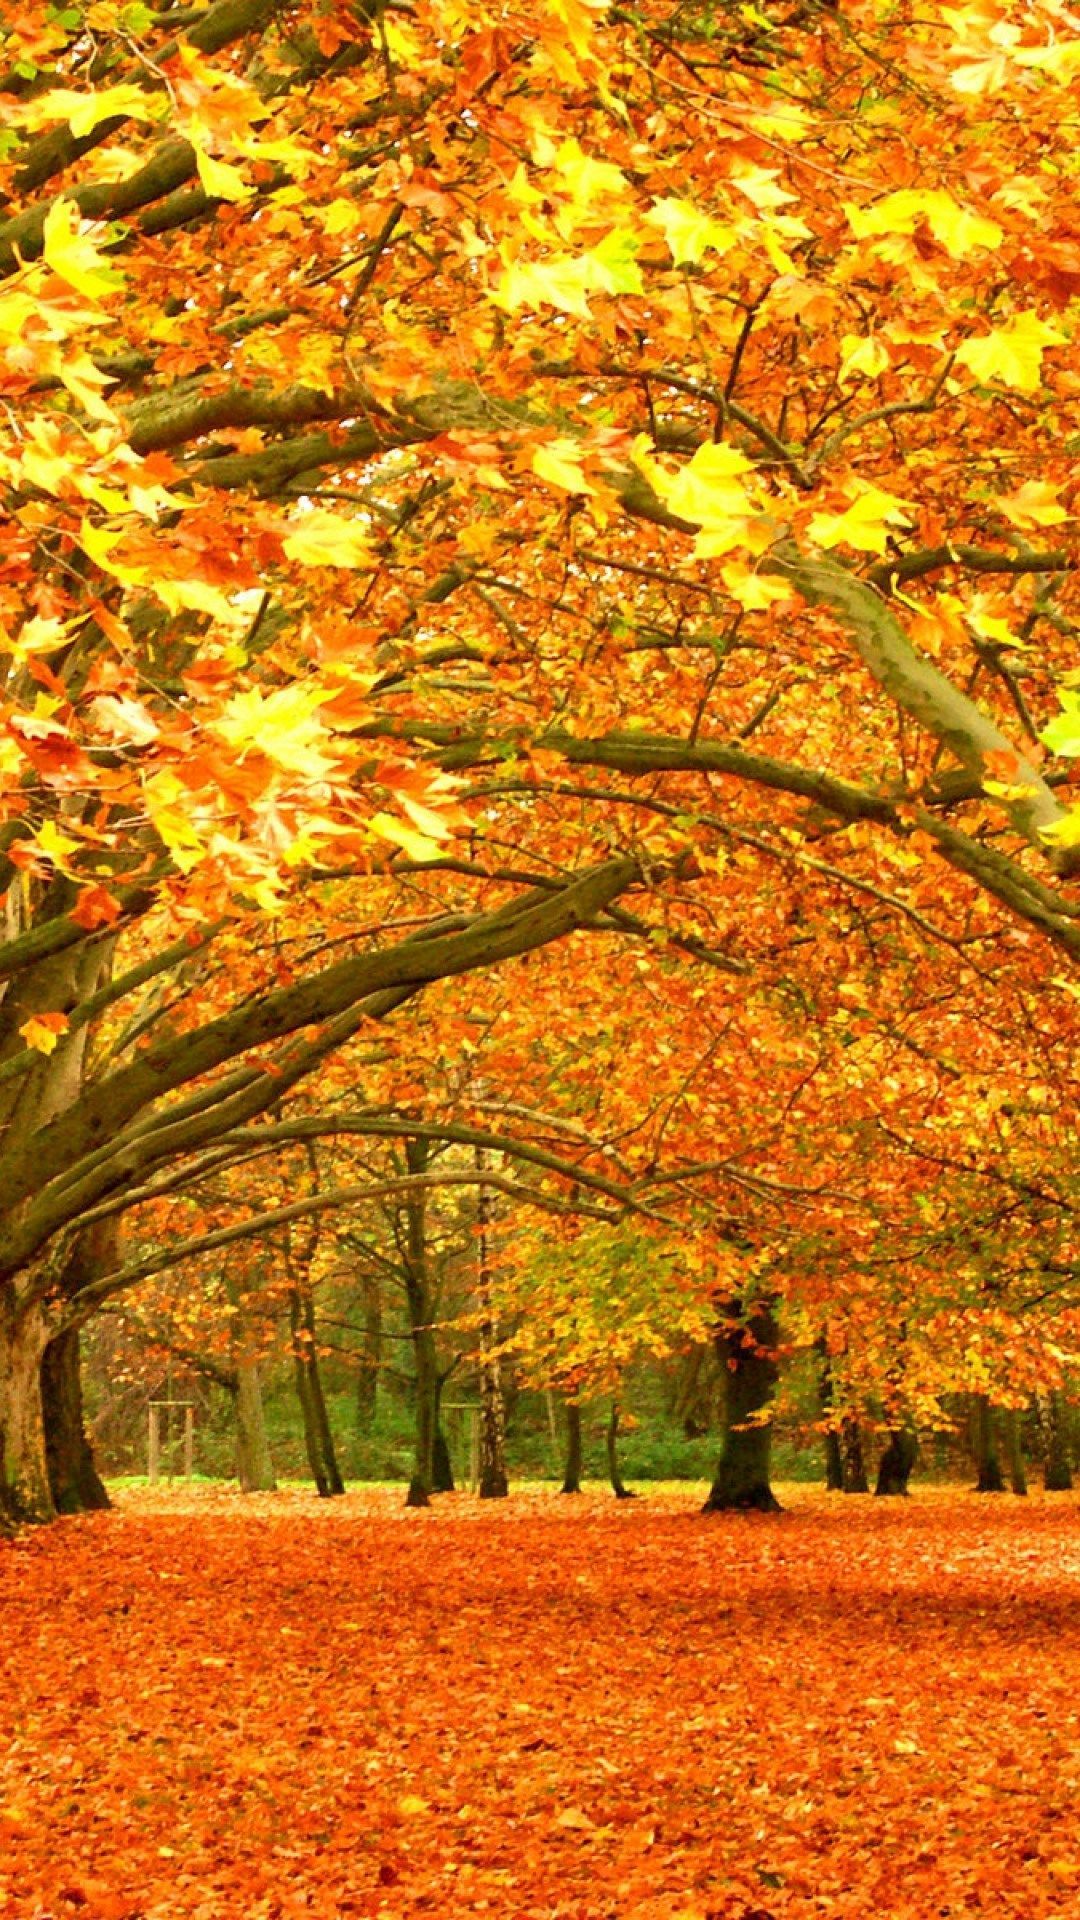 autumn 1080 x 1920 wallpaper download. Autumn scenery, Autumn scenes, Autumn nature